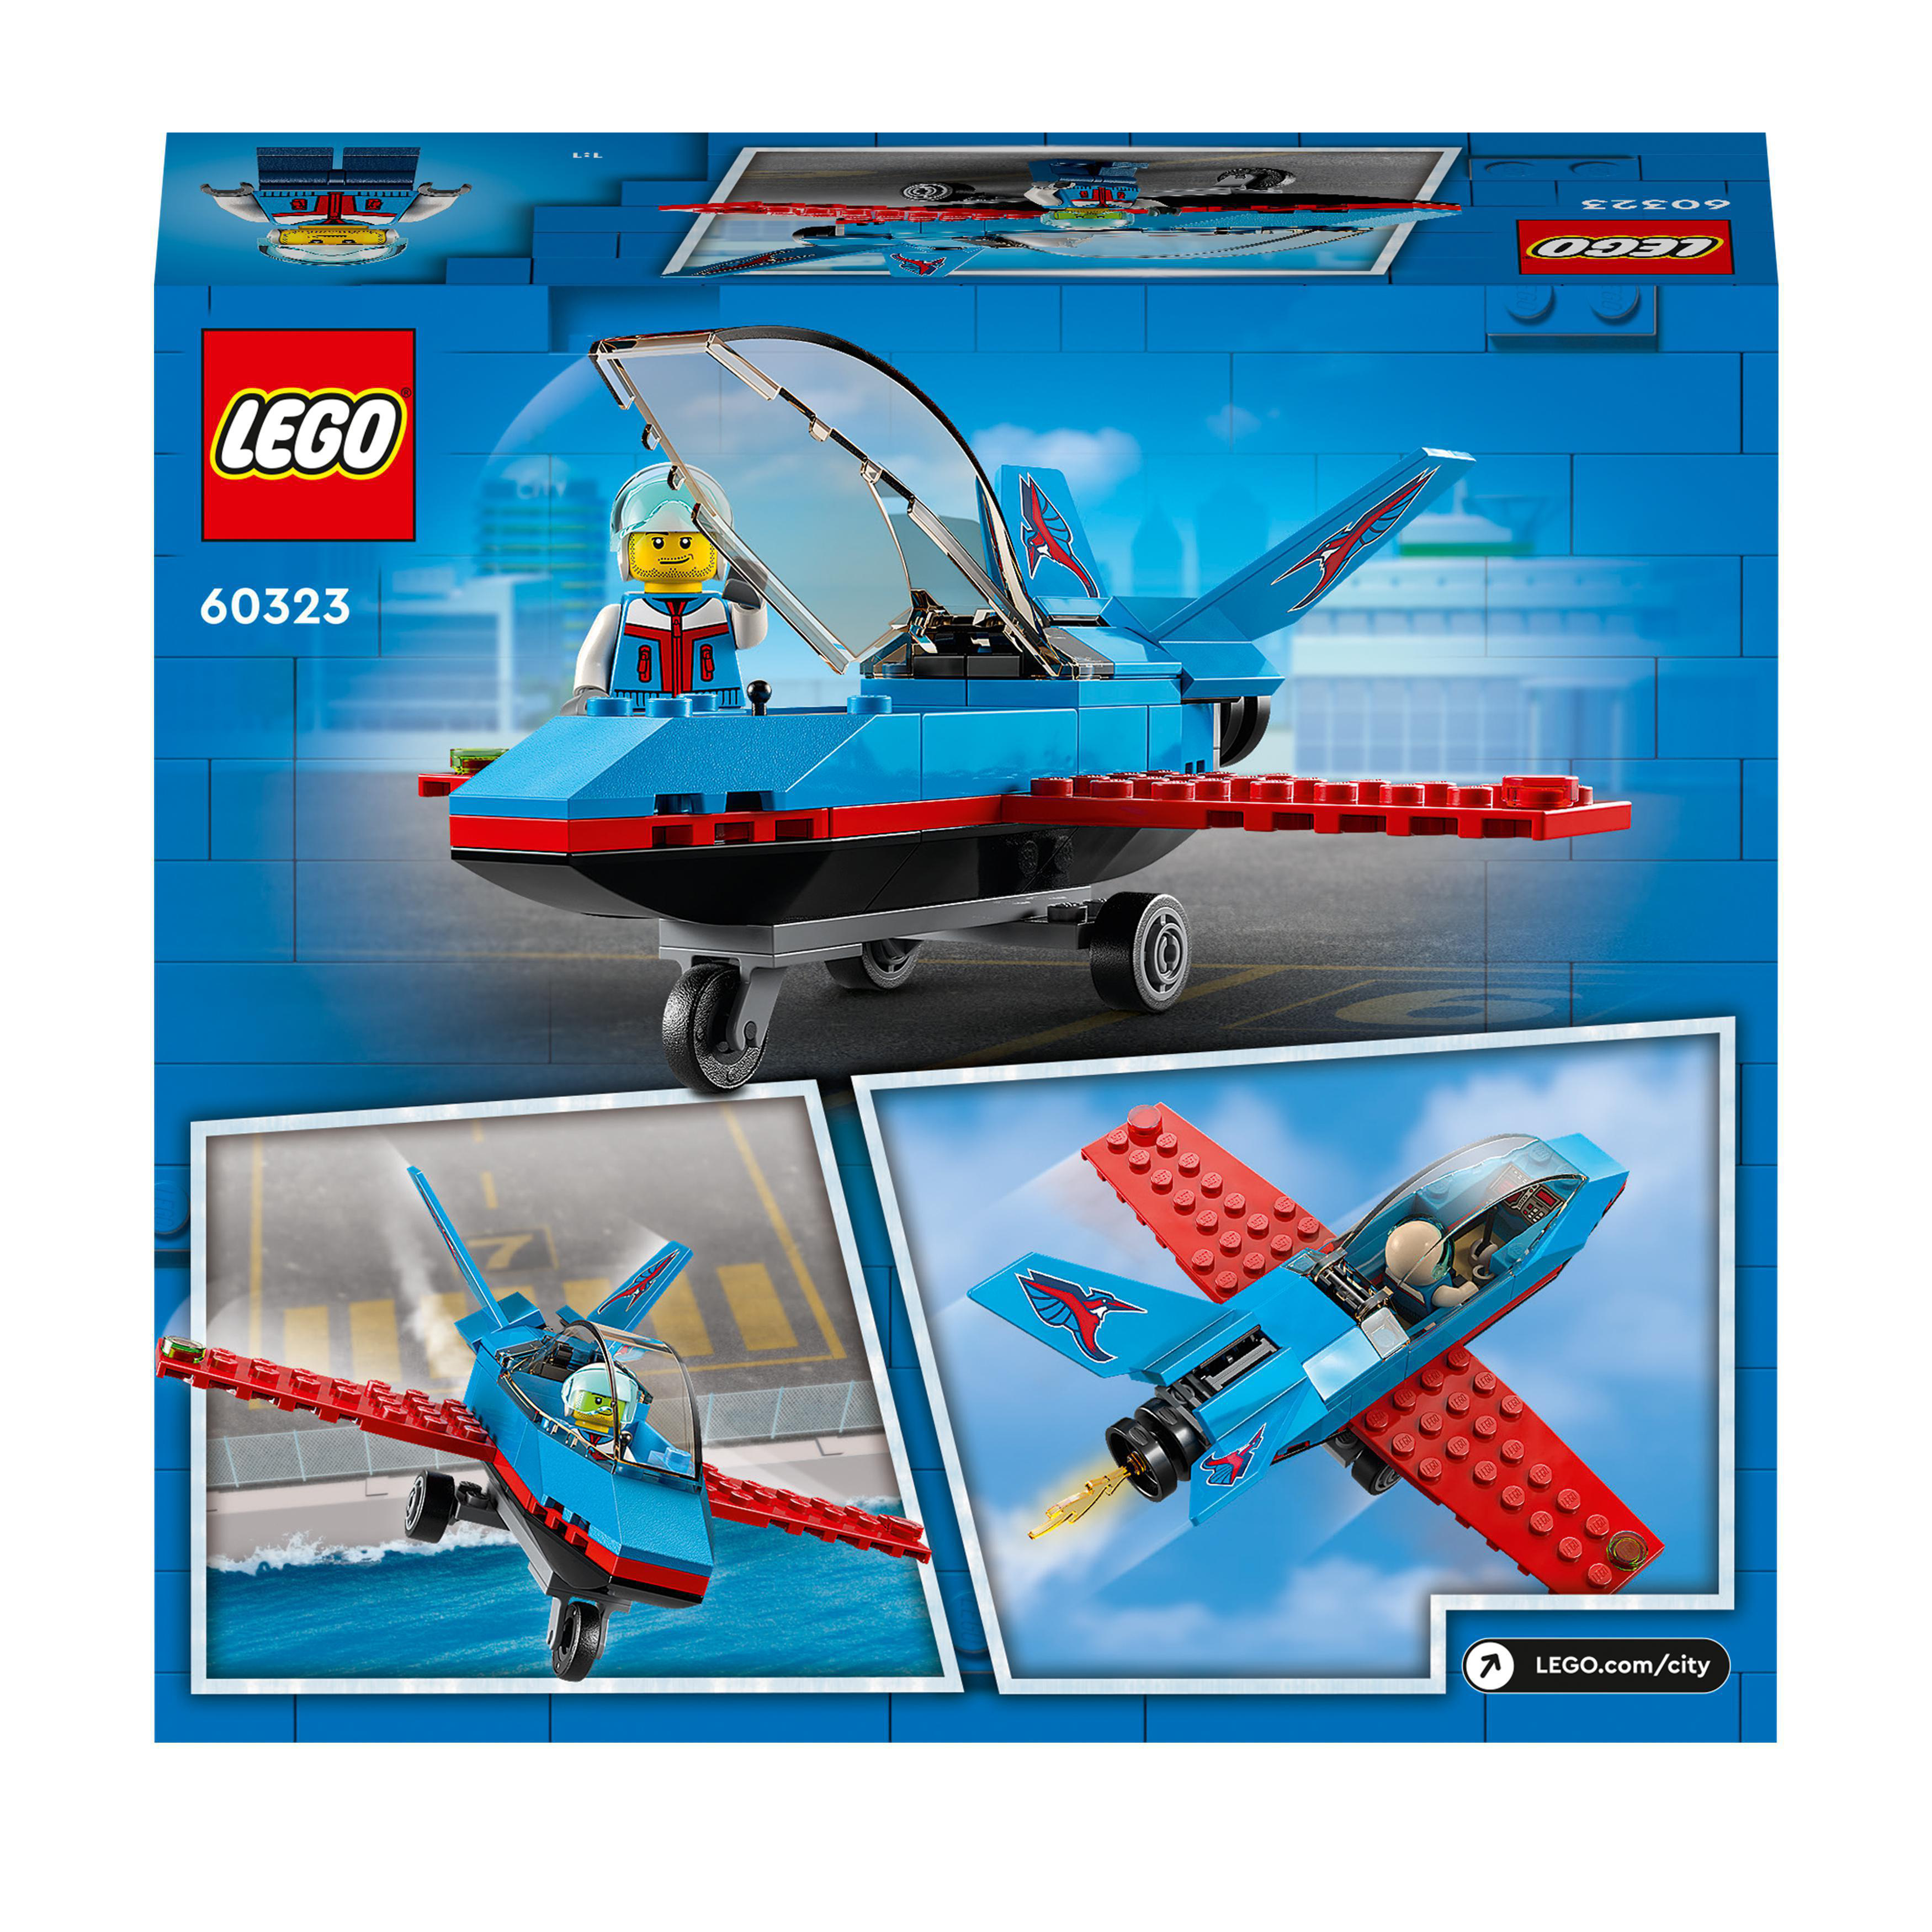 LEGO City 60323 Bausatz, Mehrfarbig Stuntflugzeug